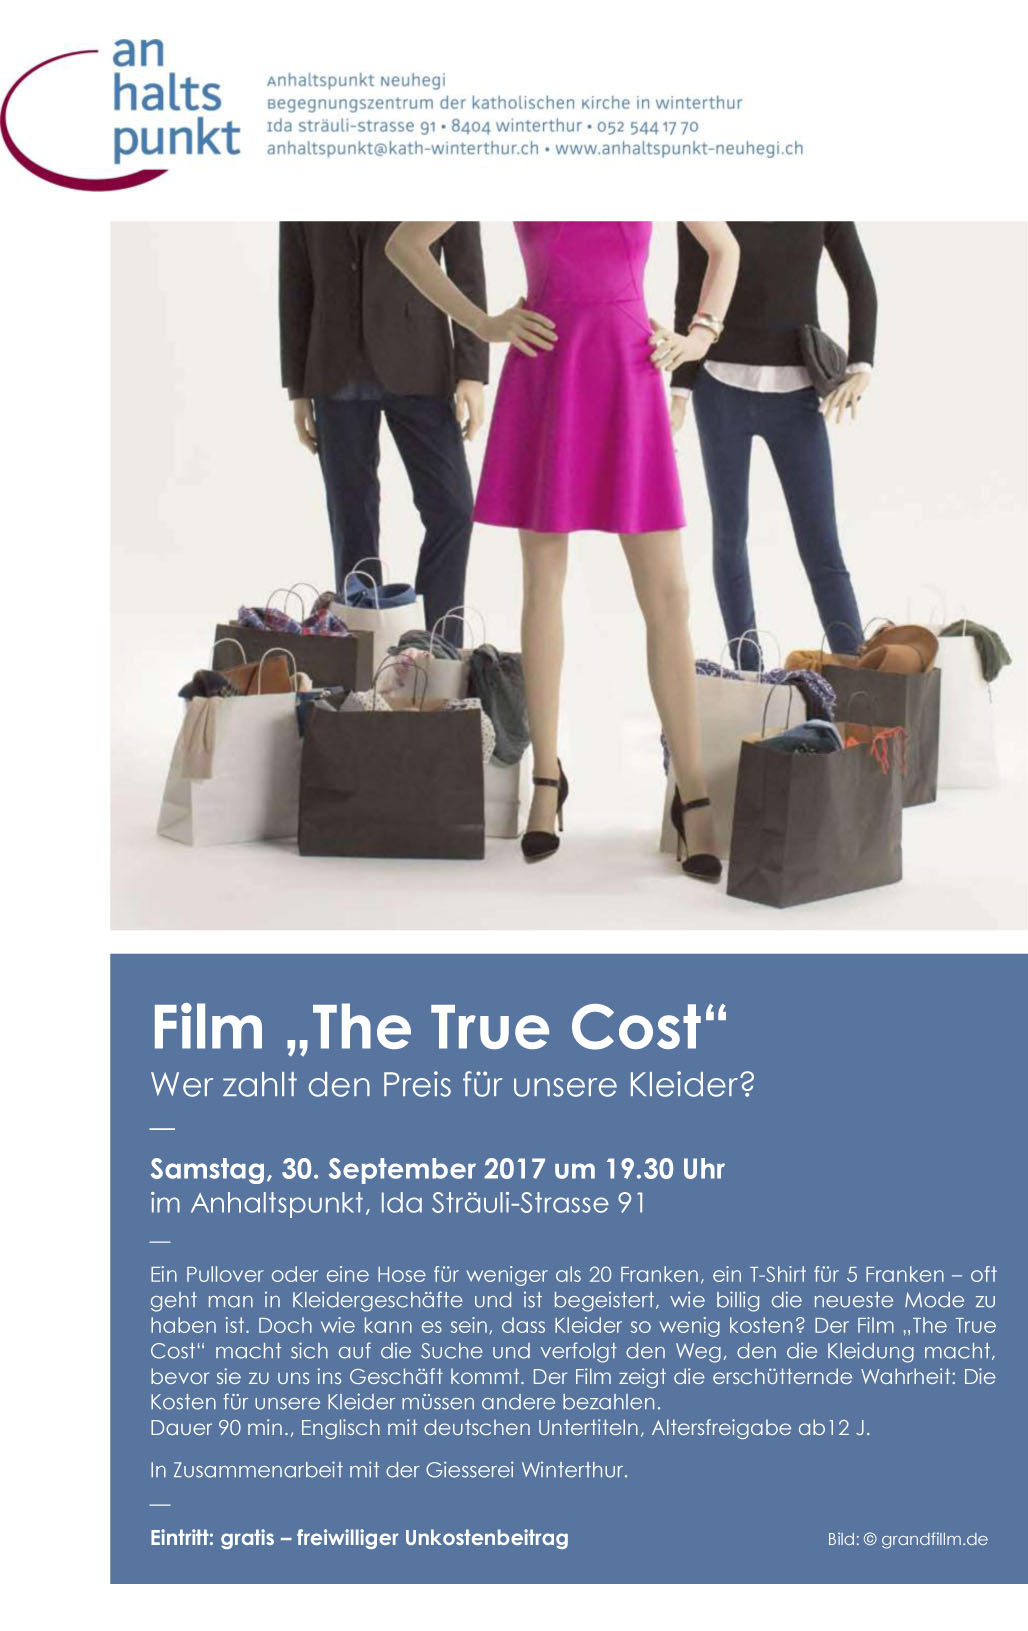 ahp Film The True Cost 17